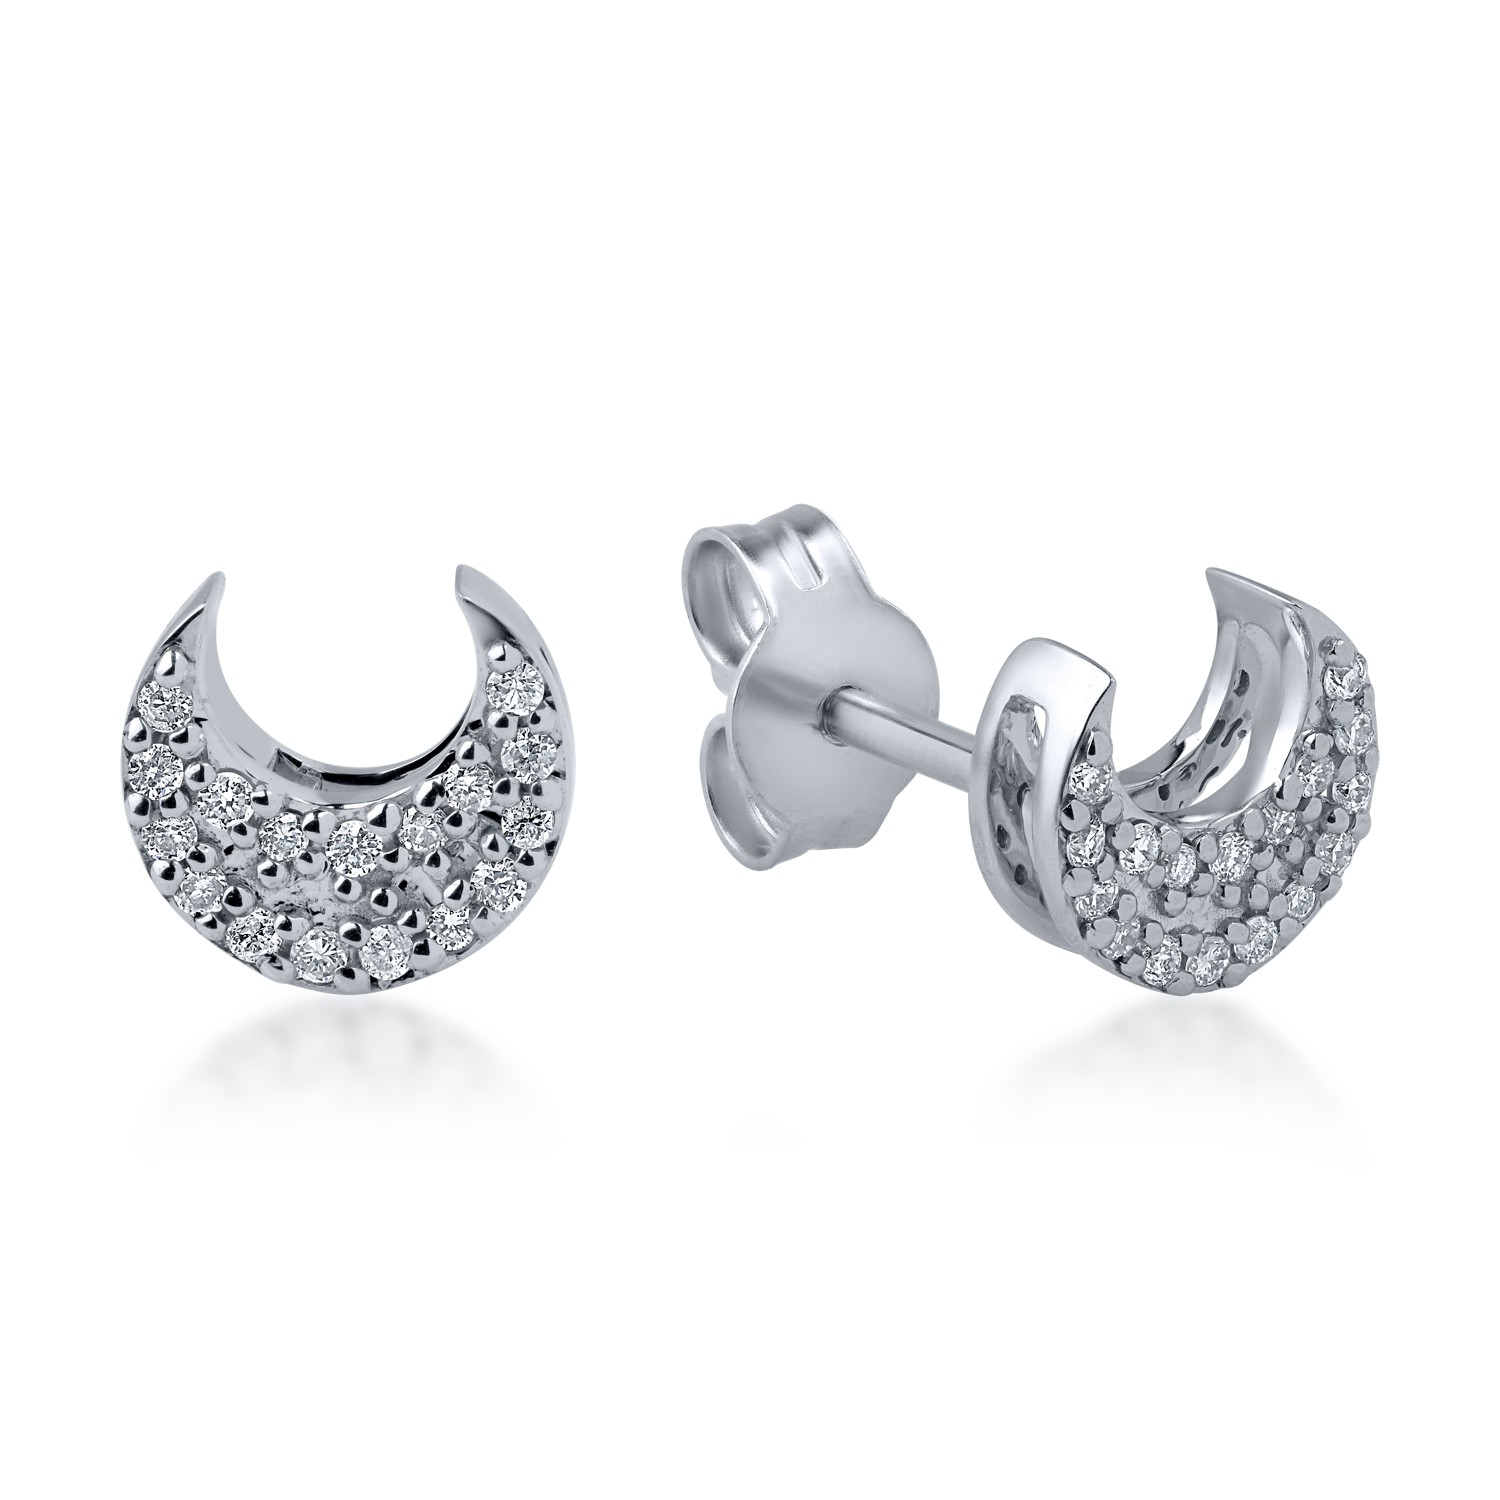 White gold halfmoon earrings with 0.1ct diamonds